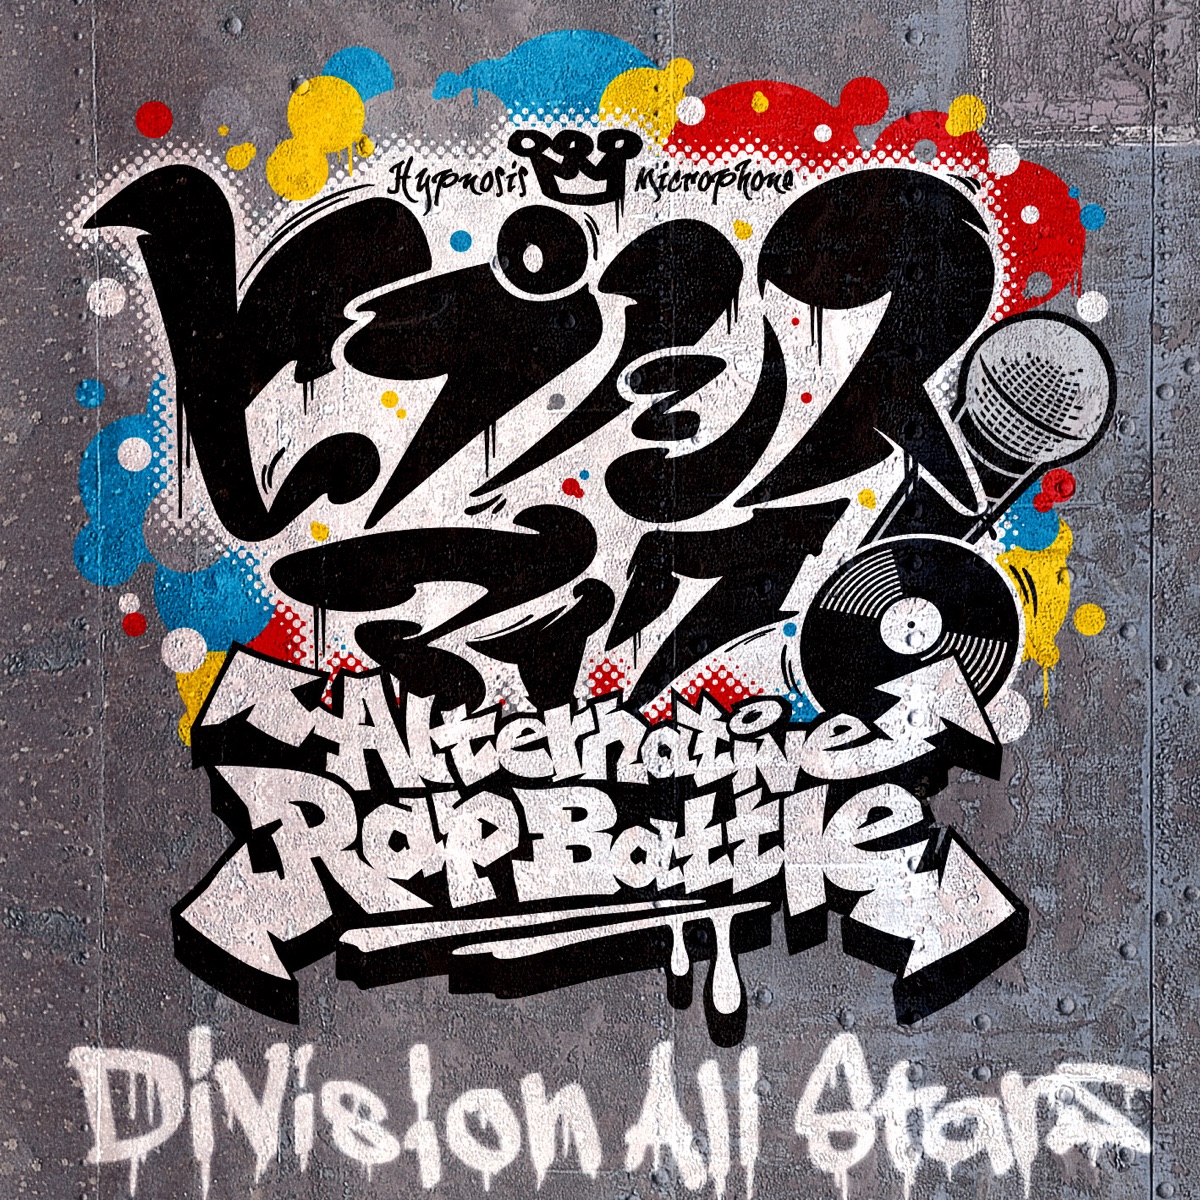 Cover art for『Division All Stars - ヒプノシスマイク -Alternative Rap Battle-』from the release『Hypnosis Mic -Alternative Rap Battle-